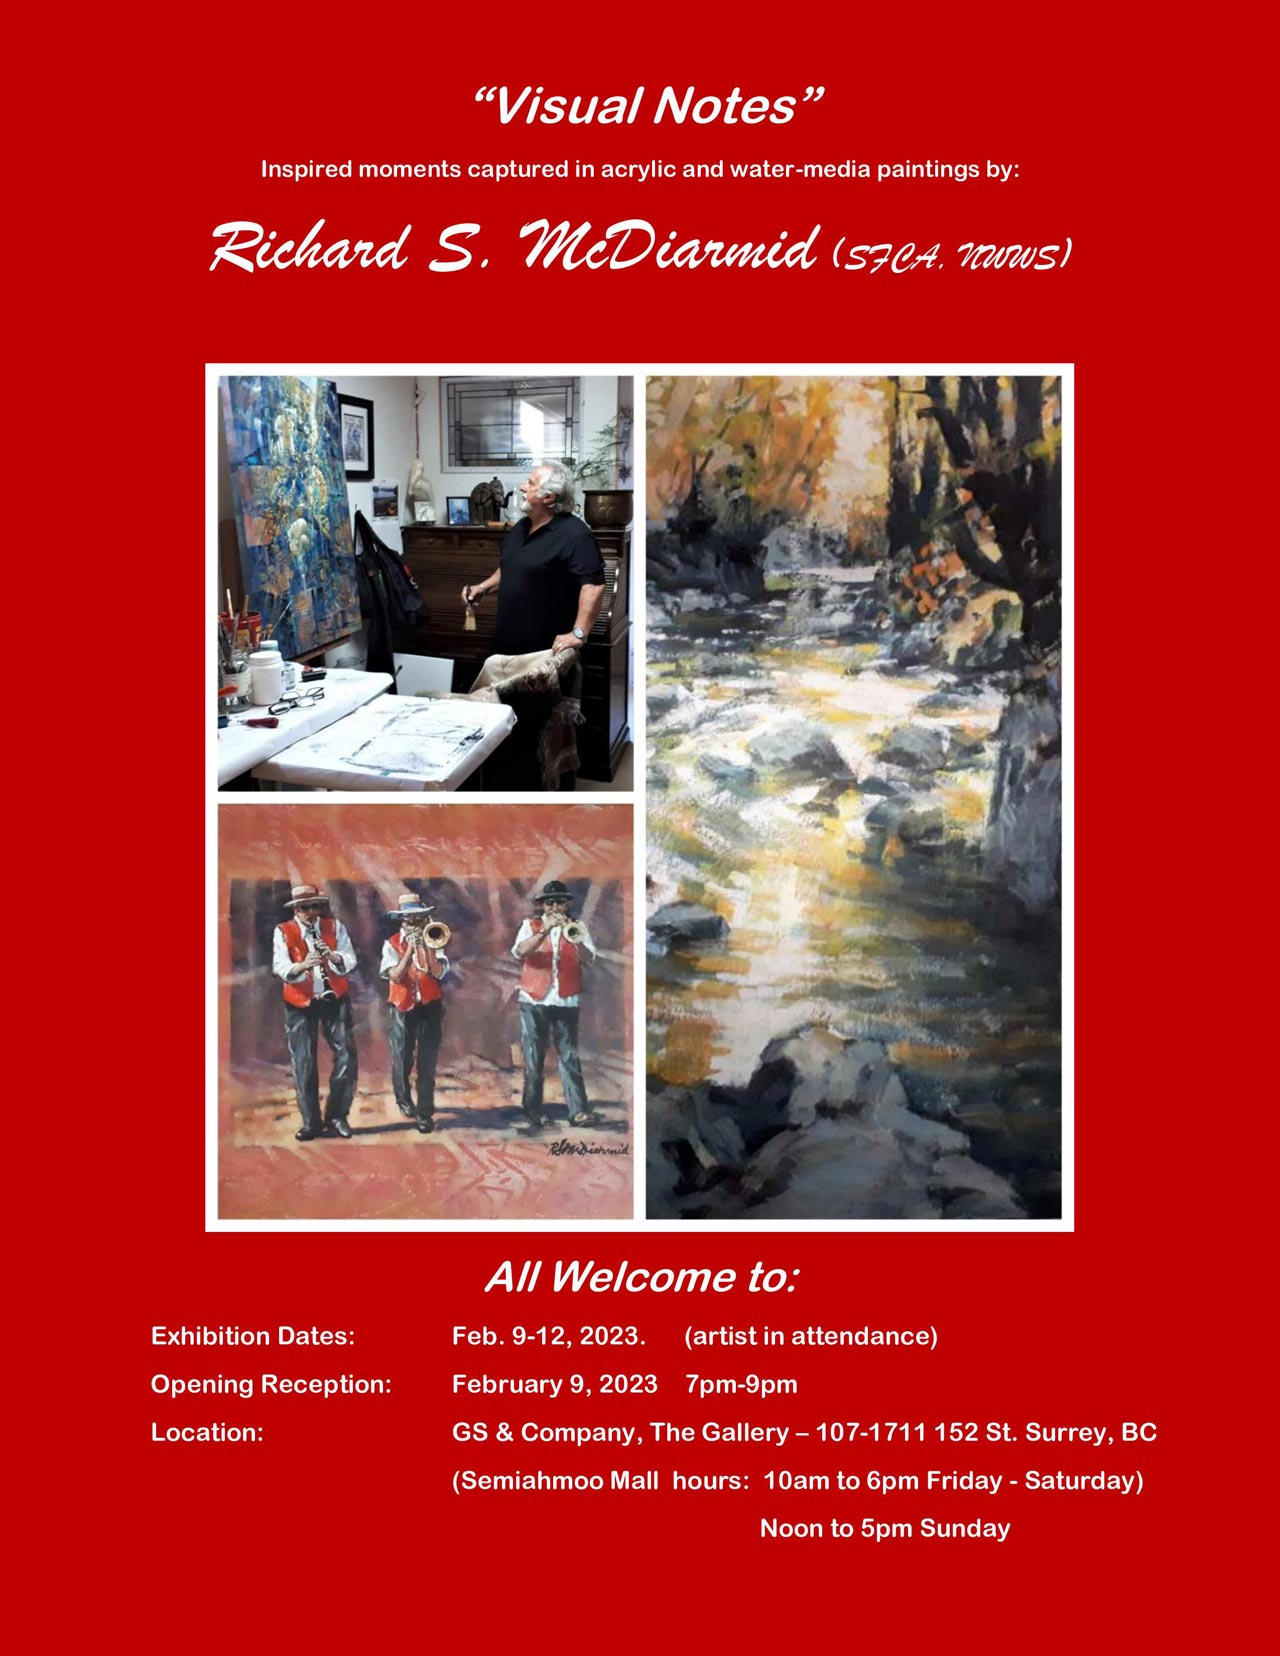 Richard McDiarmid Event